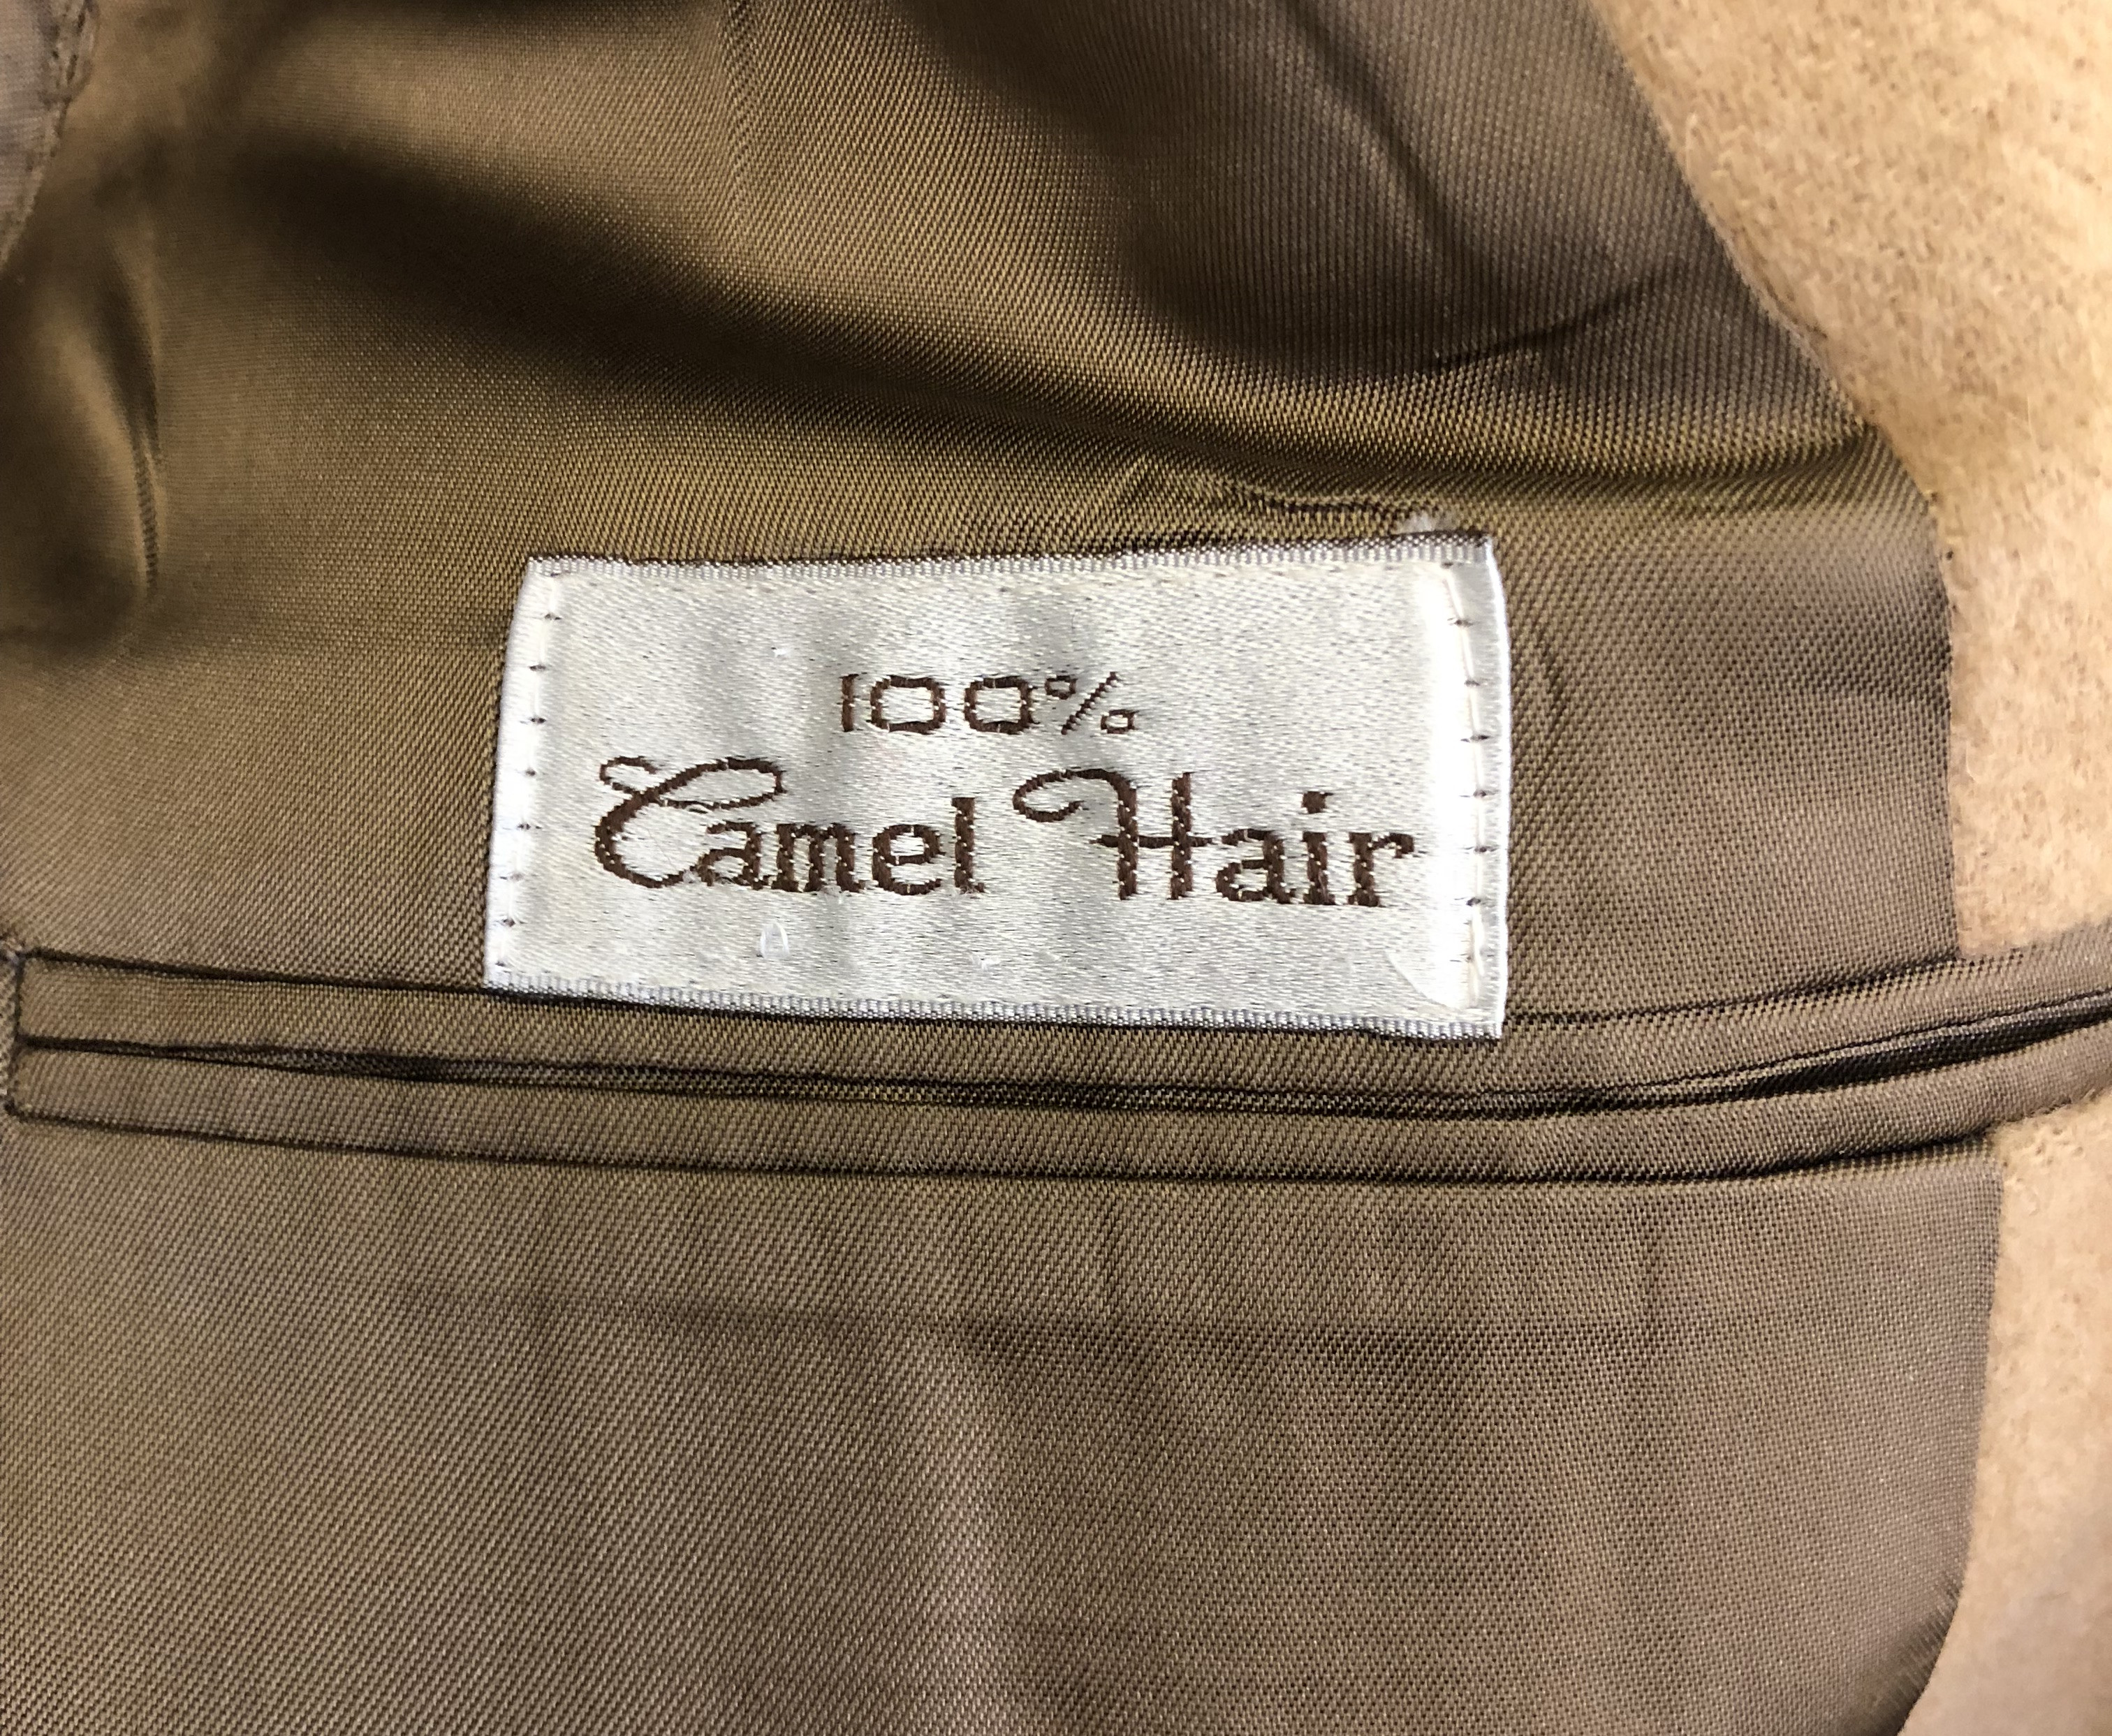 www.theGenuineGentleman.com camel hair suit